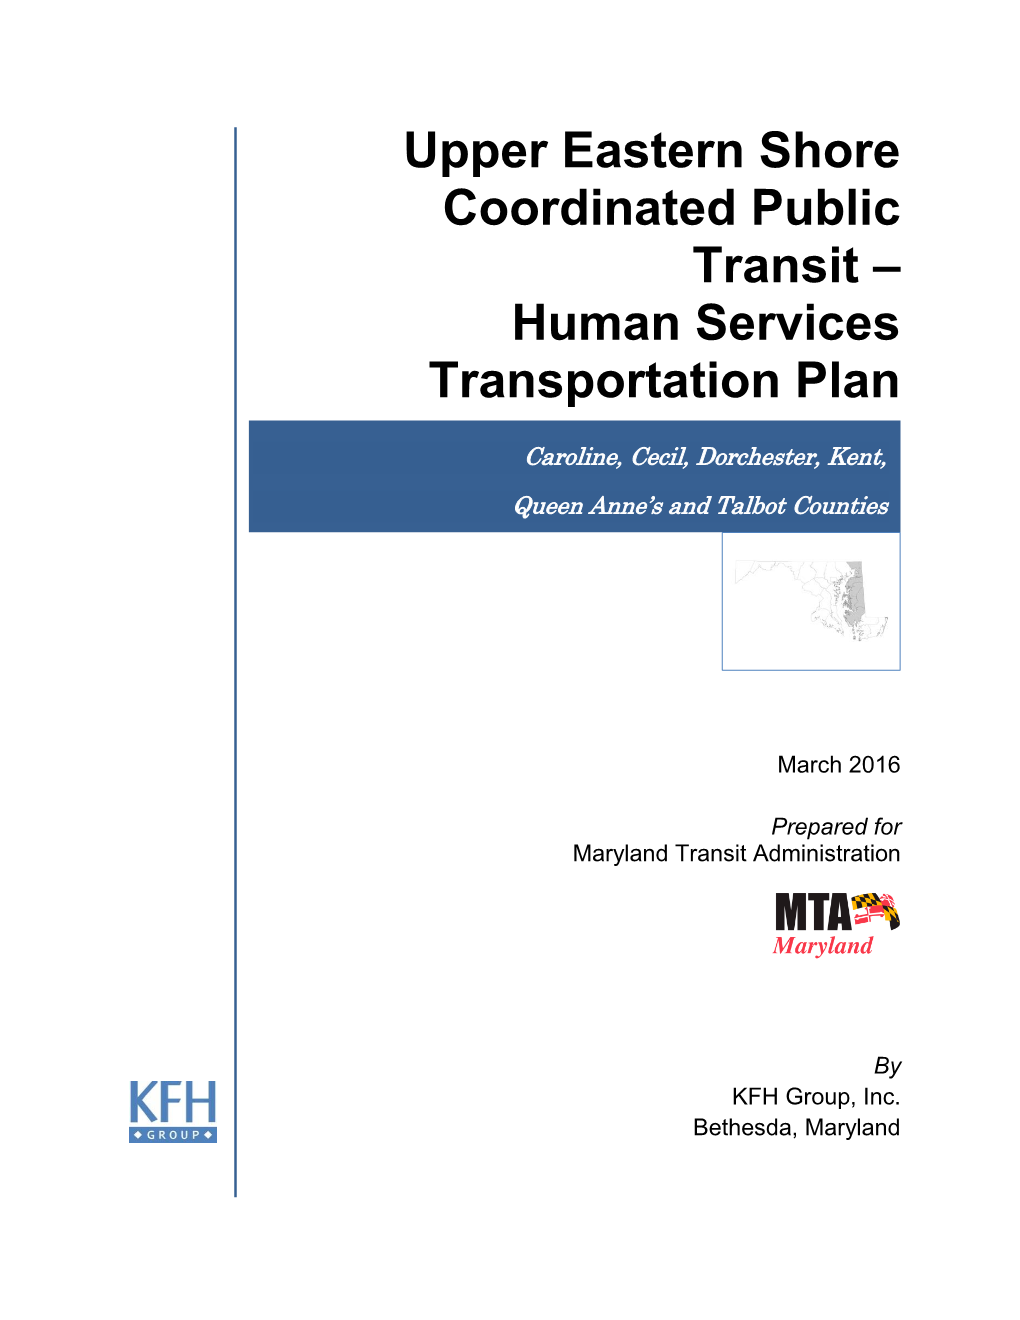 Upper Eastern Shore Coordinated Public Transit – Human Services Transportation Plan